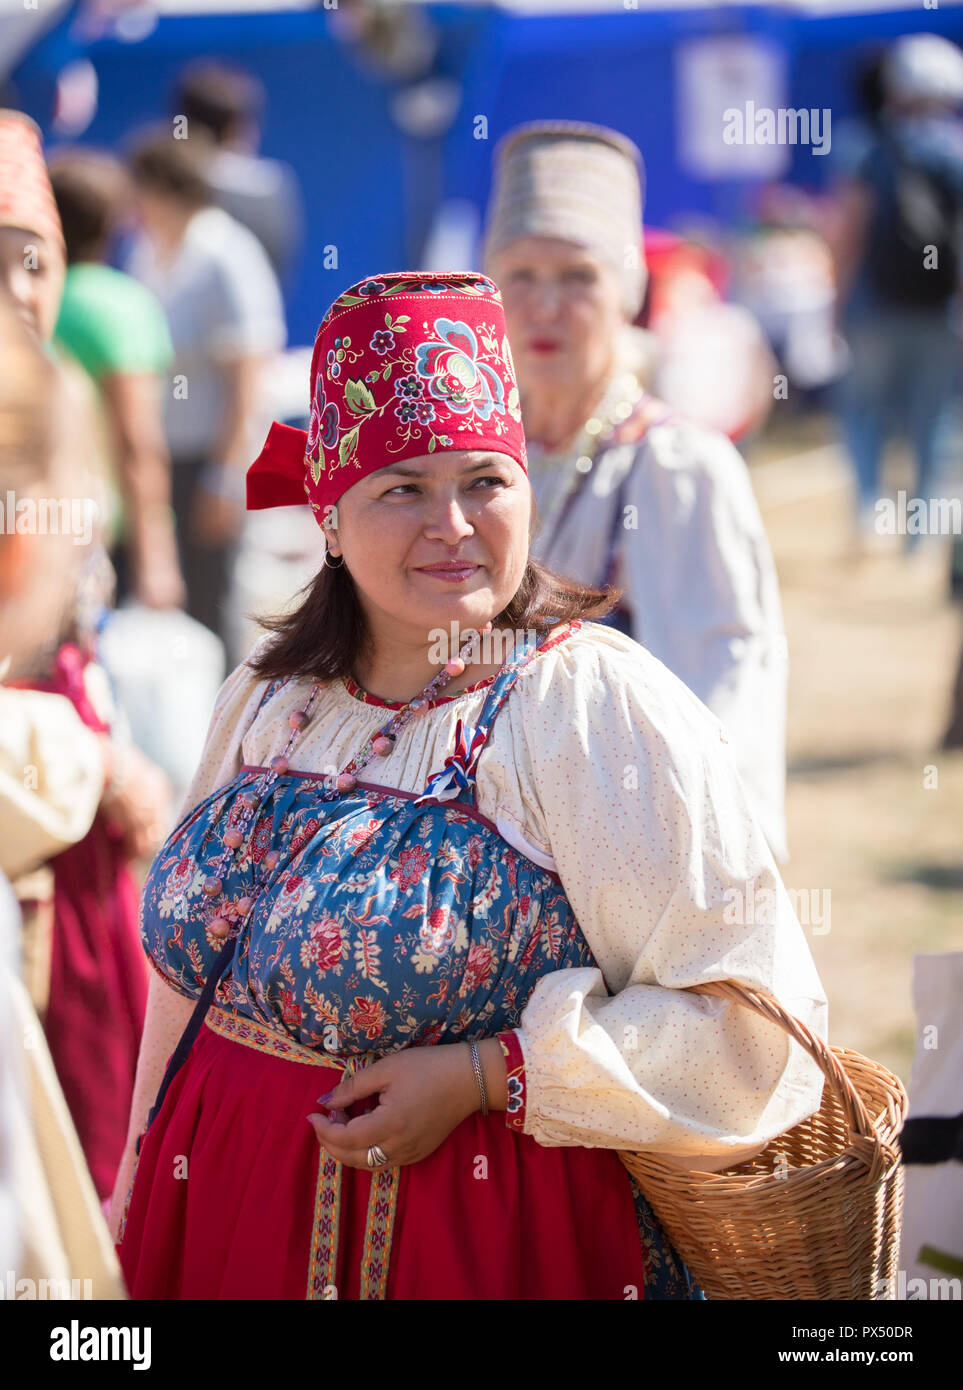 20 August 2018, Krasnovidovo, Russia - mature woman in russian folk costume  Stock Photo - Alamy